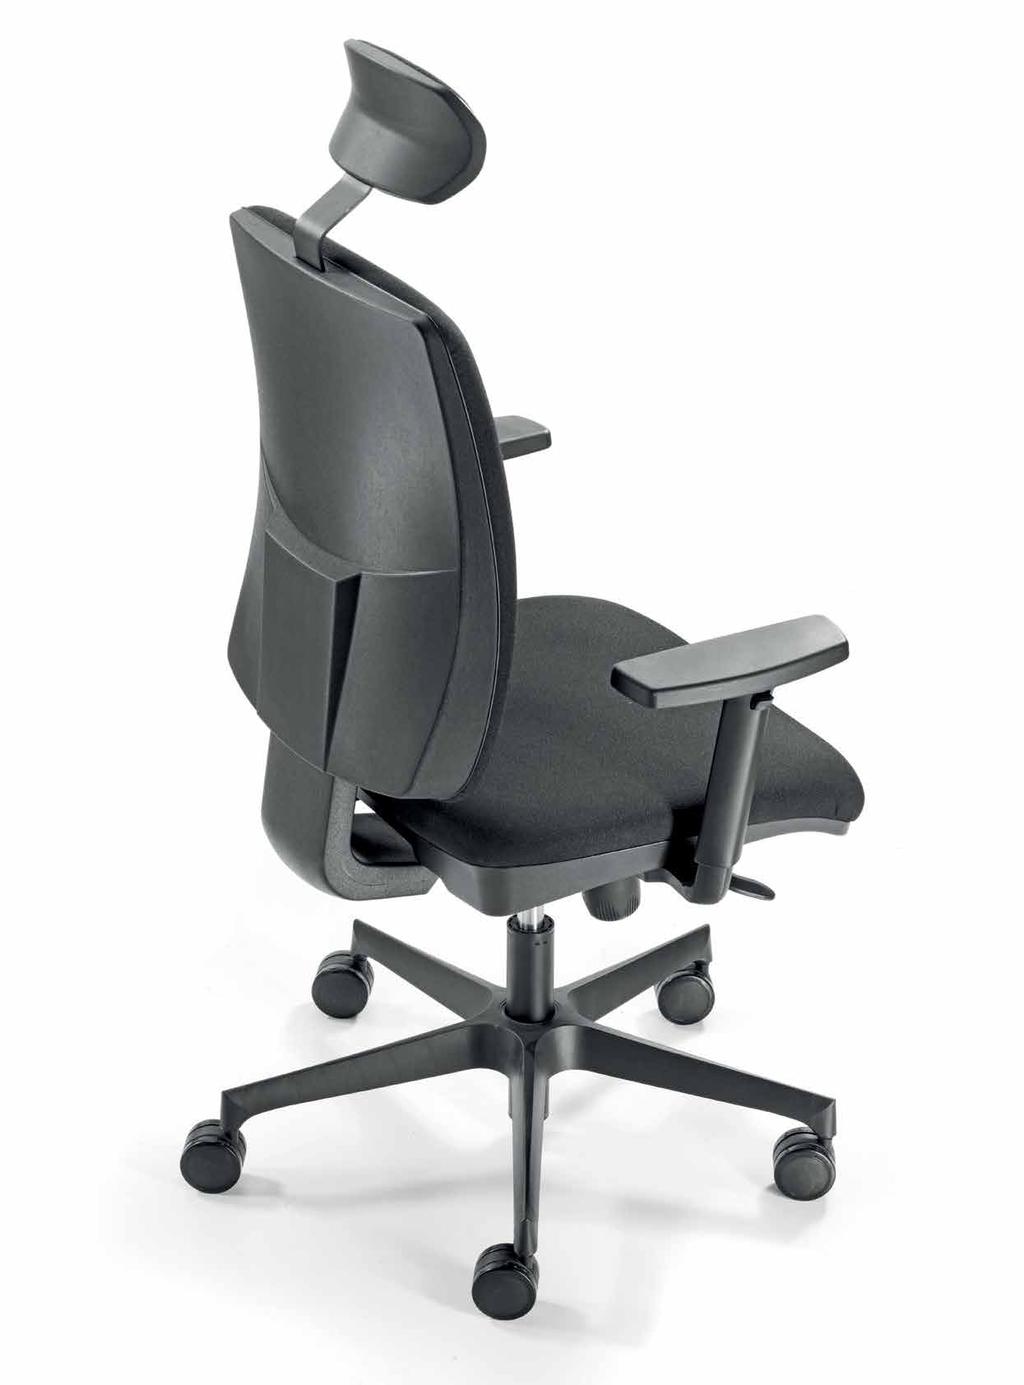 a comprehensive range of versatile and functional chairs una gamma completa di